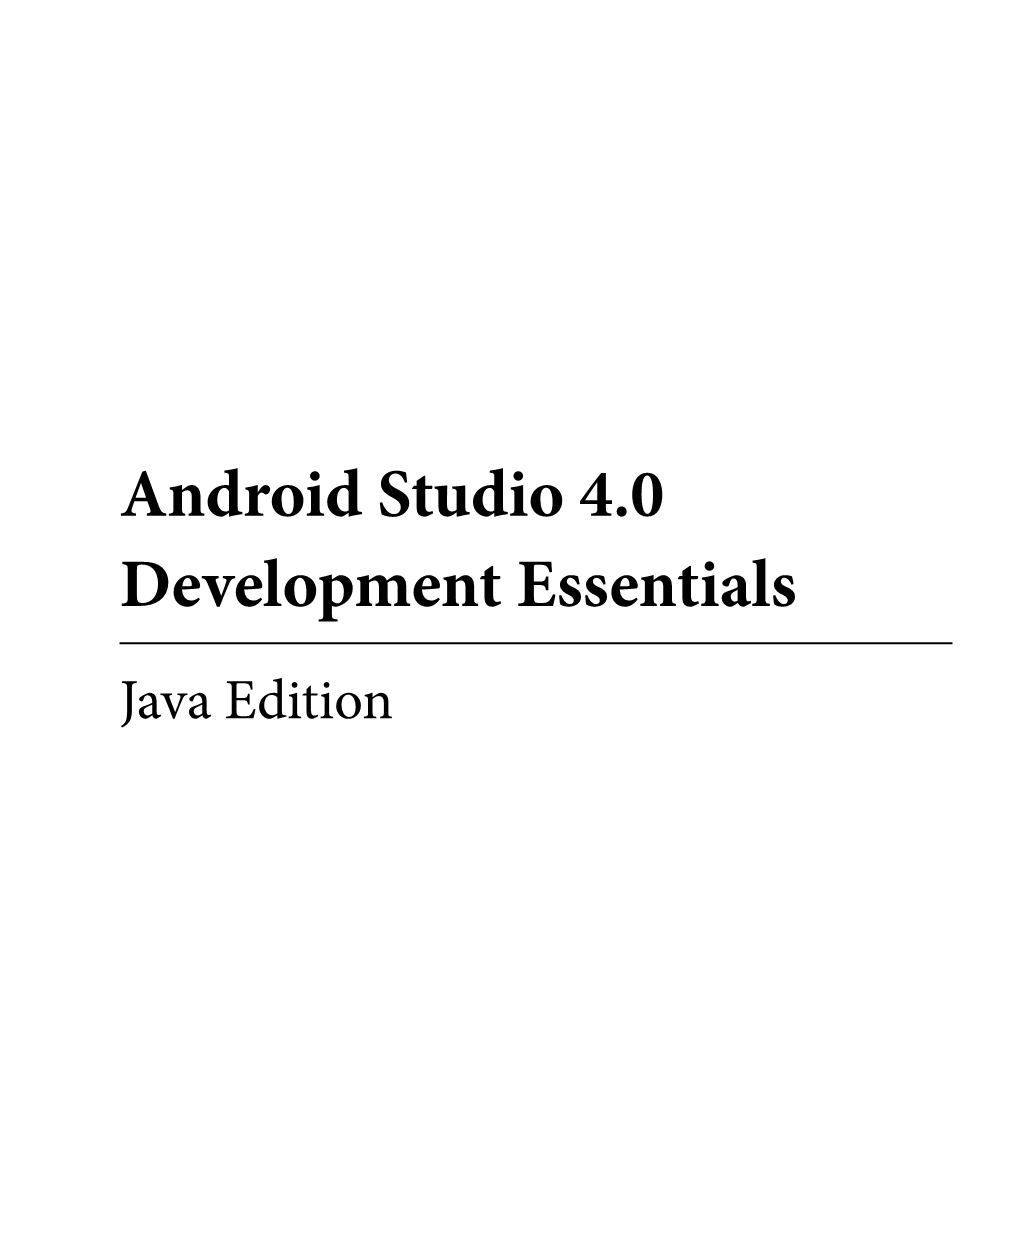 Android Studio 4.0 Development Essentials